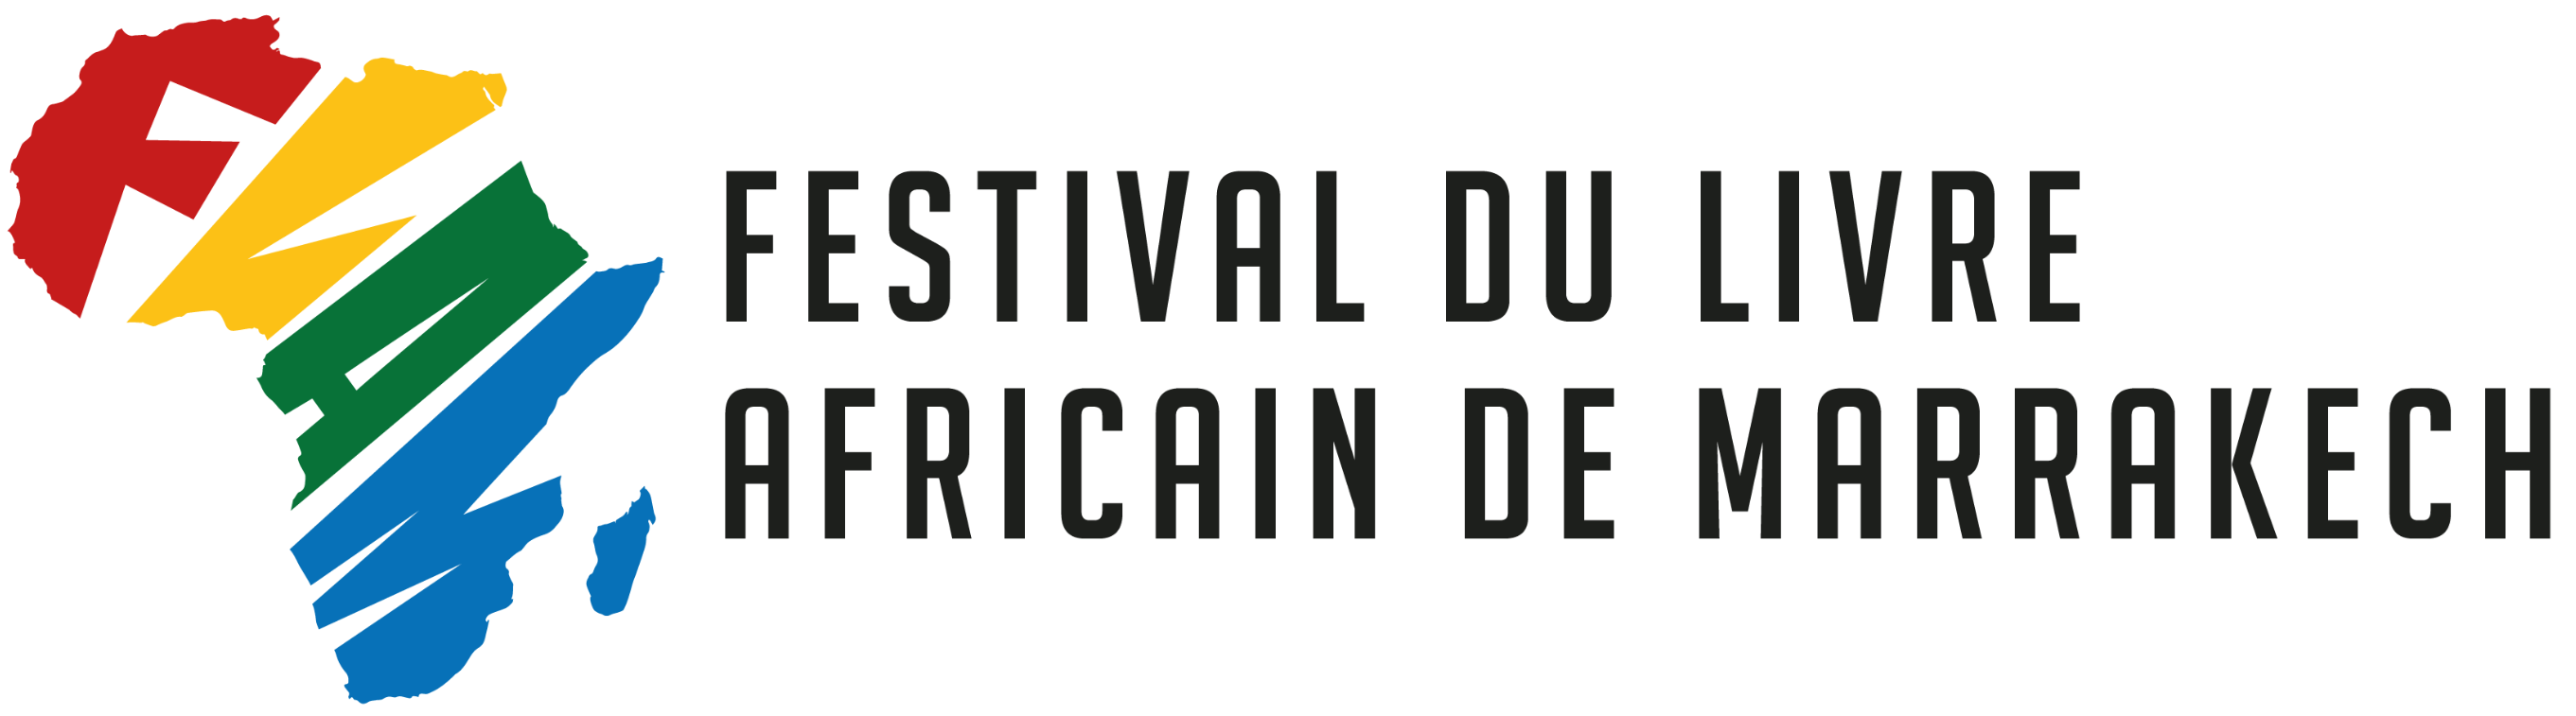 Festival du livre africain de marrakech FESTIVAL DU LIVRE AFRICAIN DE